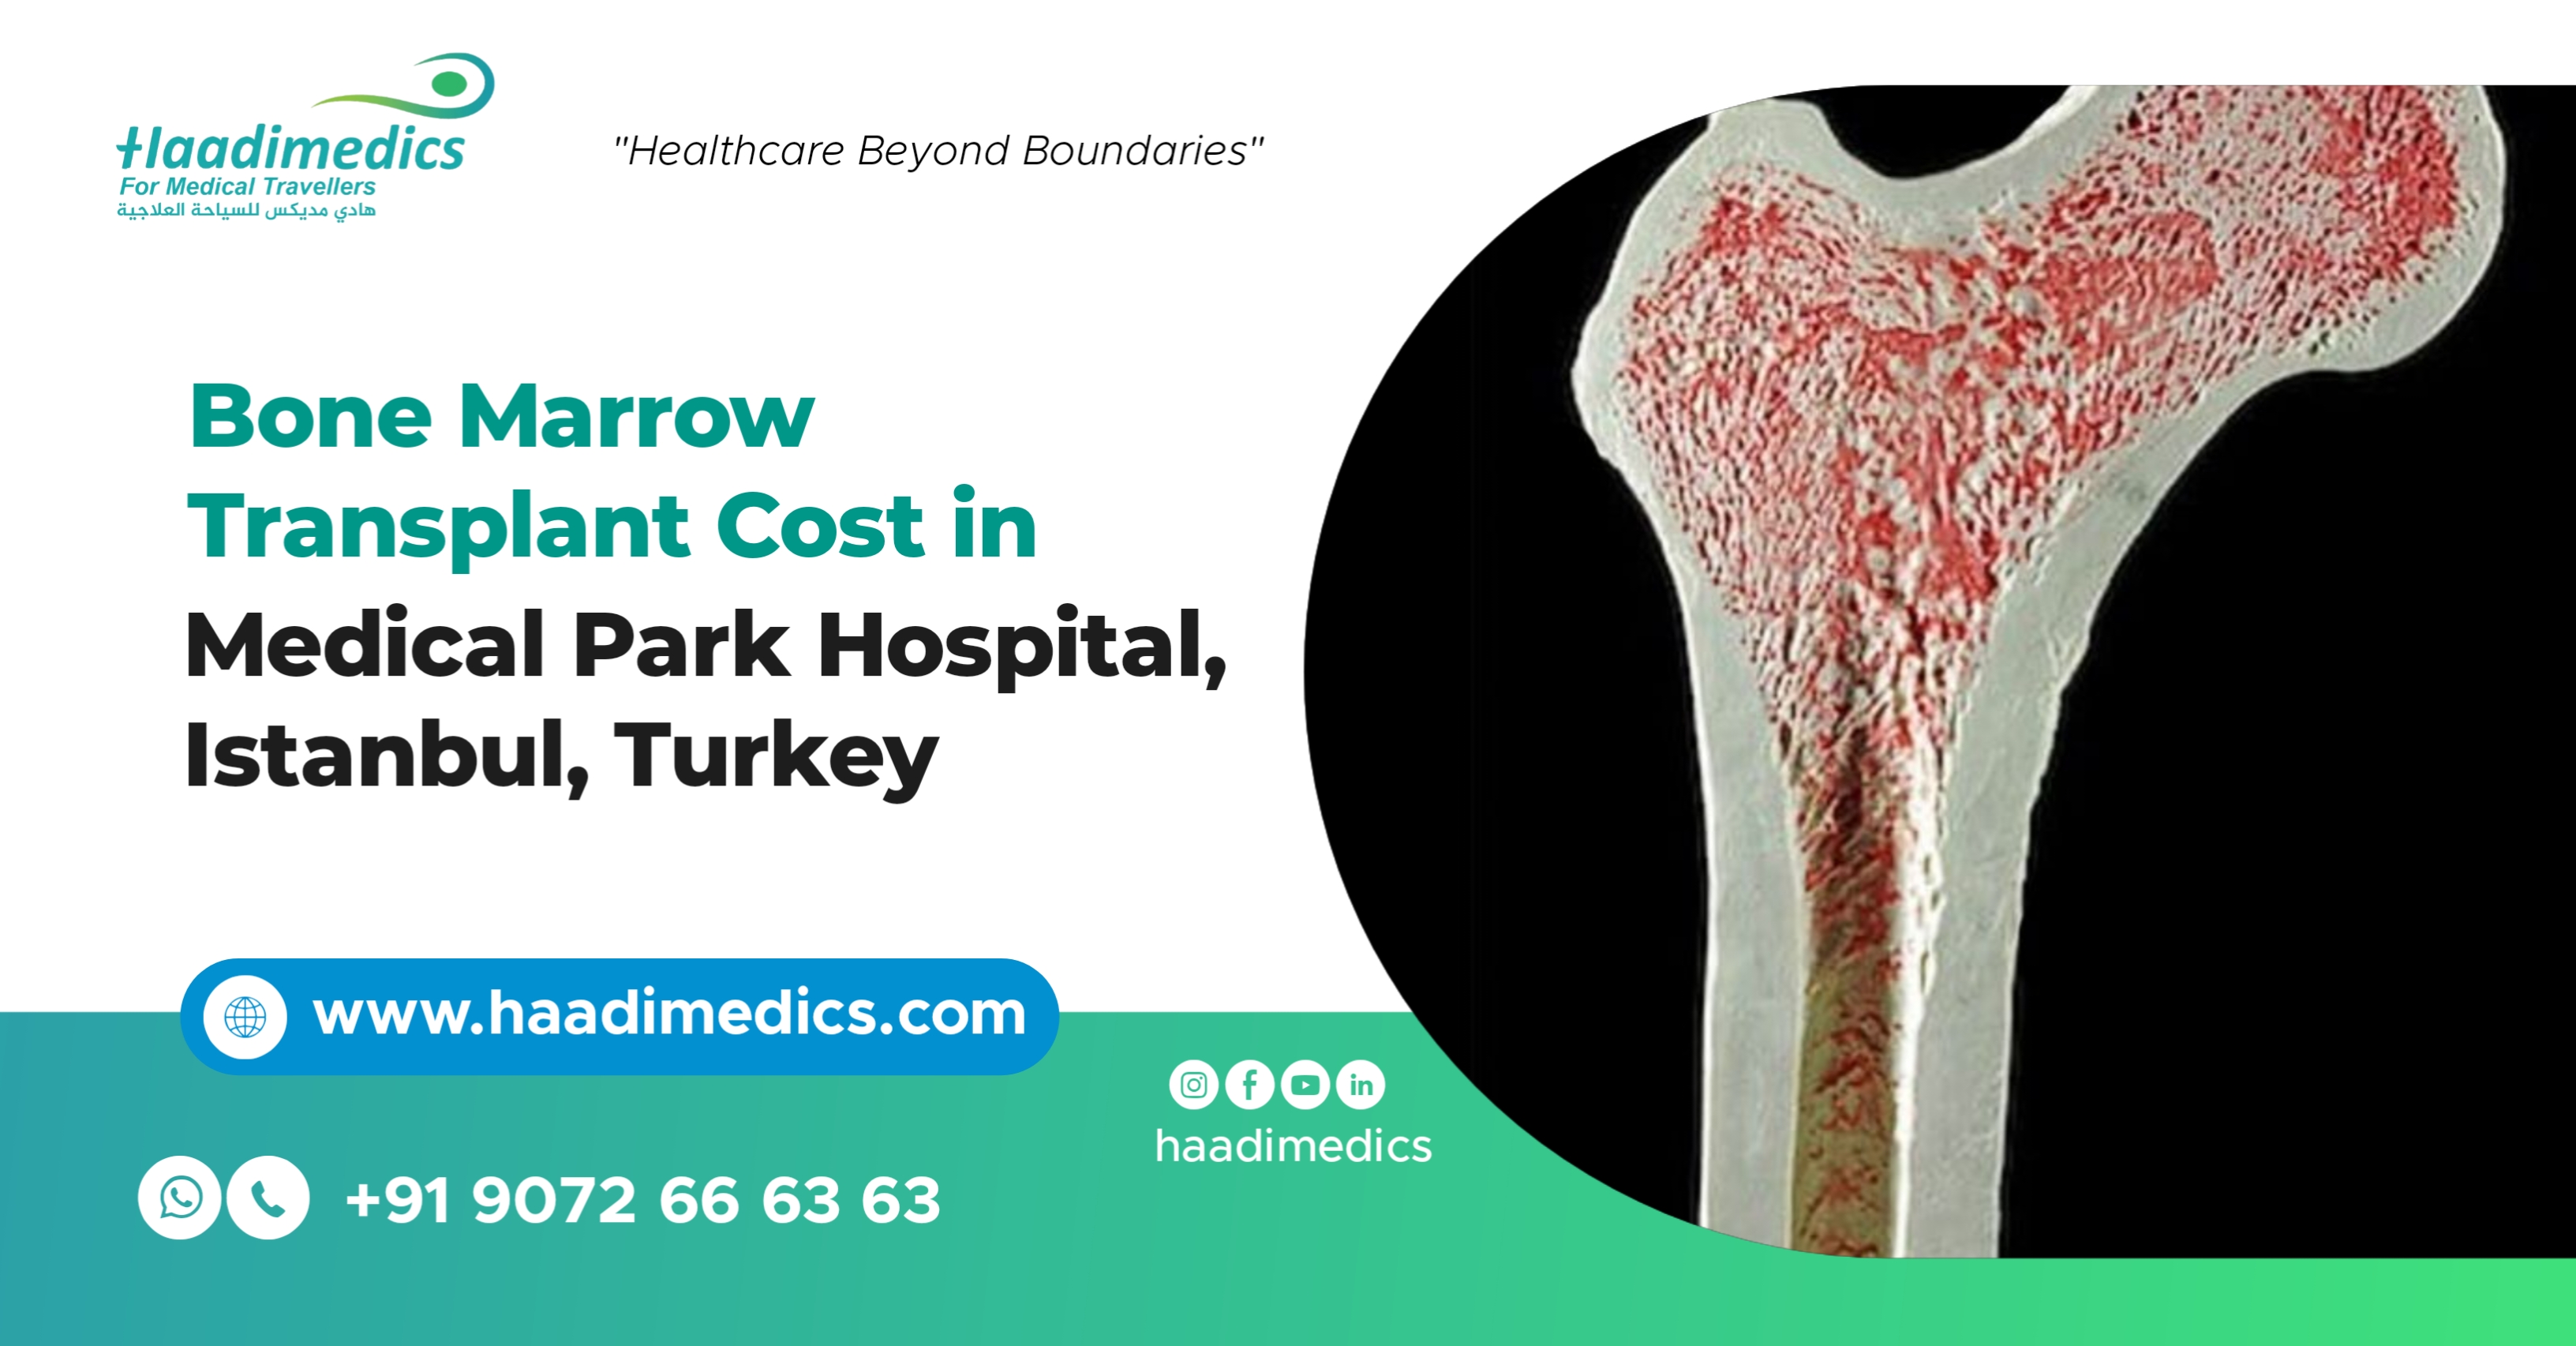 Bone Marrow Transplant Cost in Medical Park Hospital, Istanbul Turkey